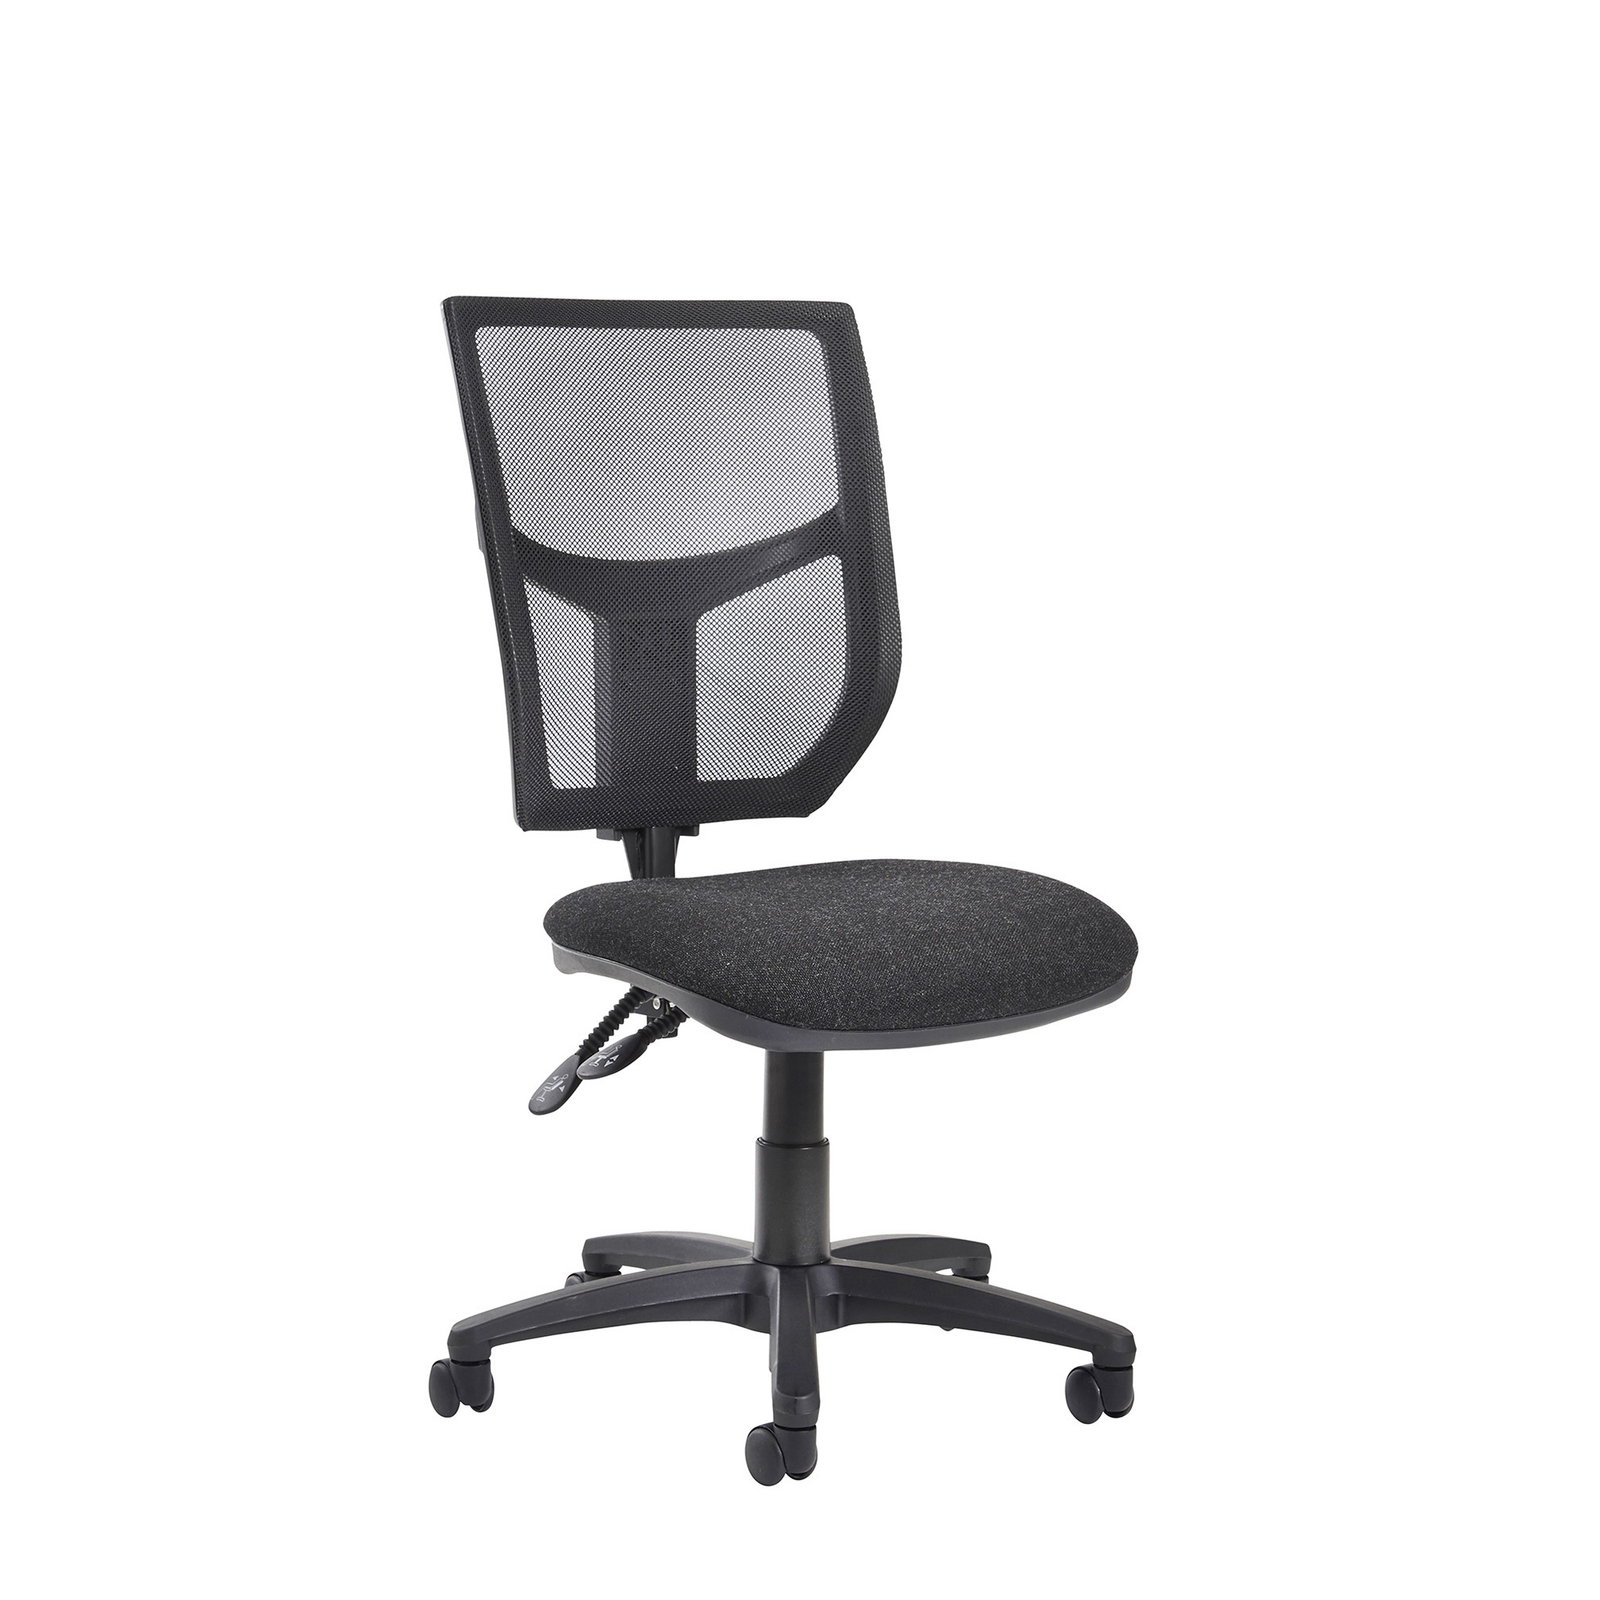 Altino High Back Operator's Chair - Charcoal